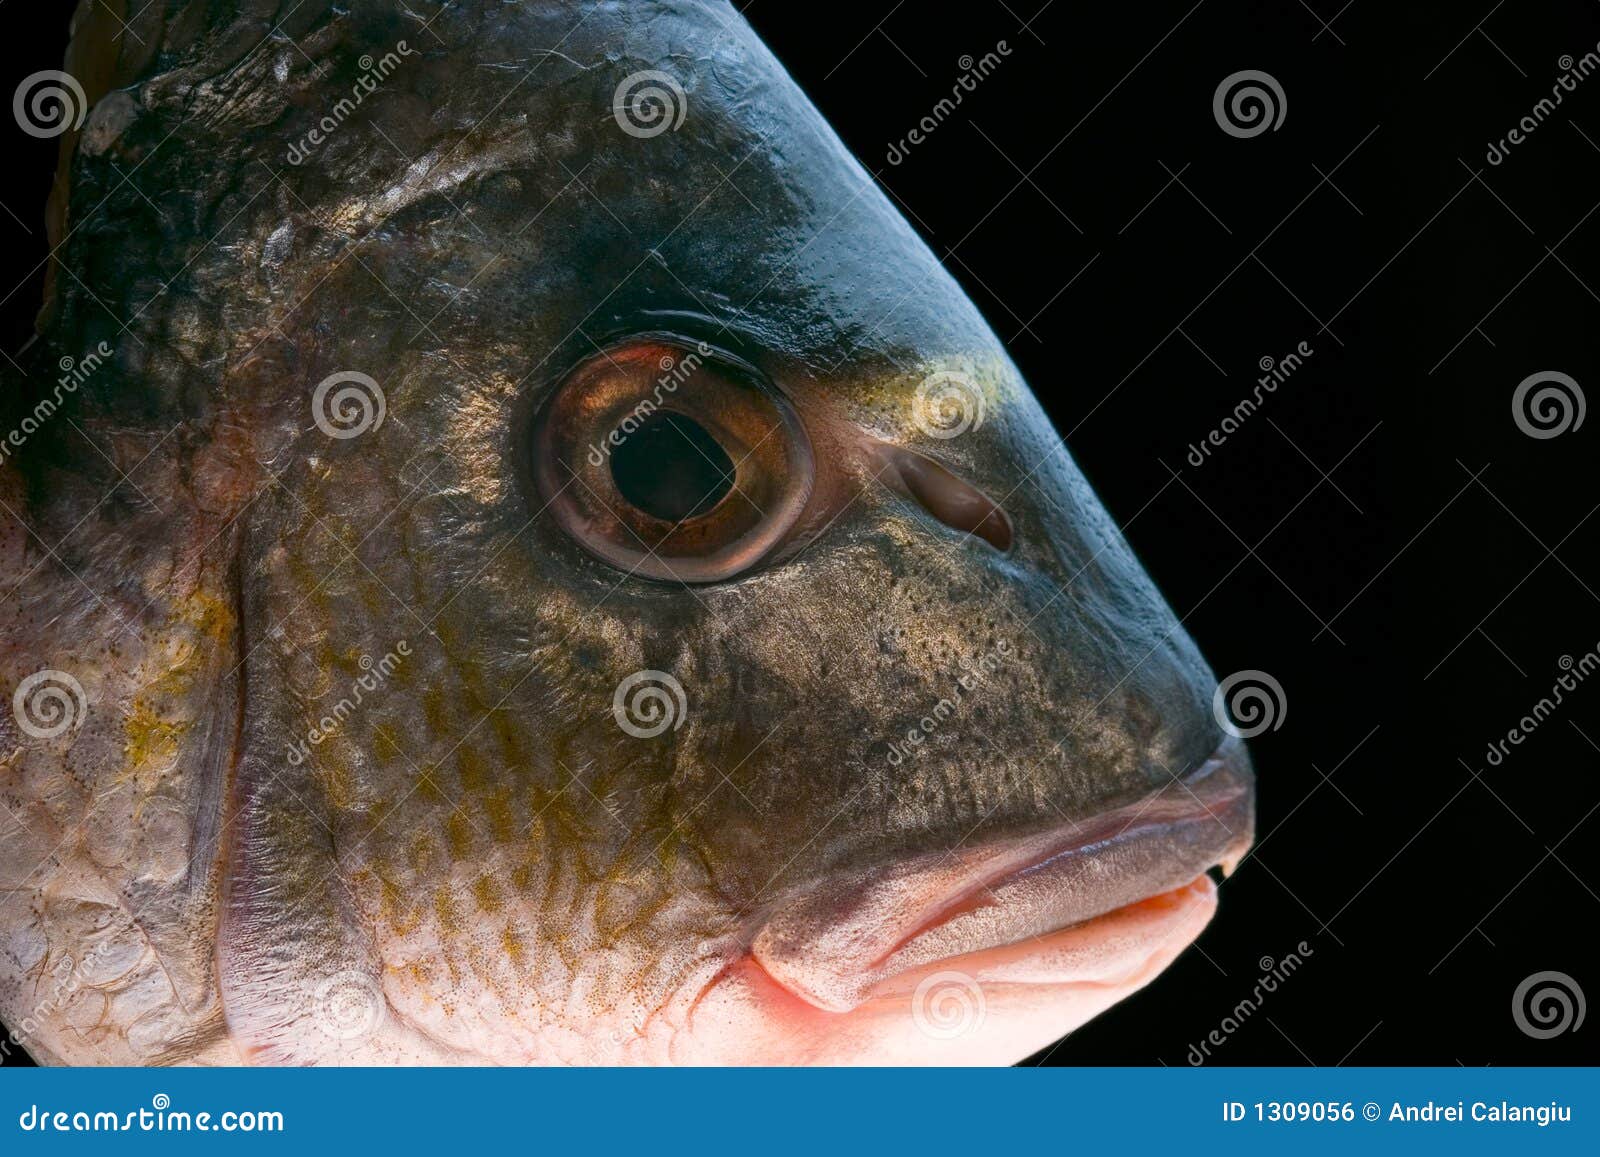 dorada fish head